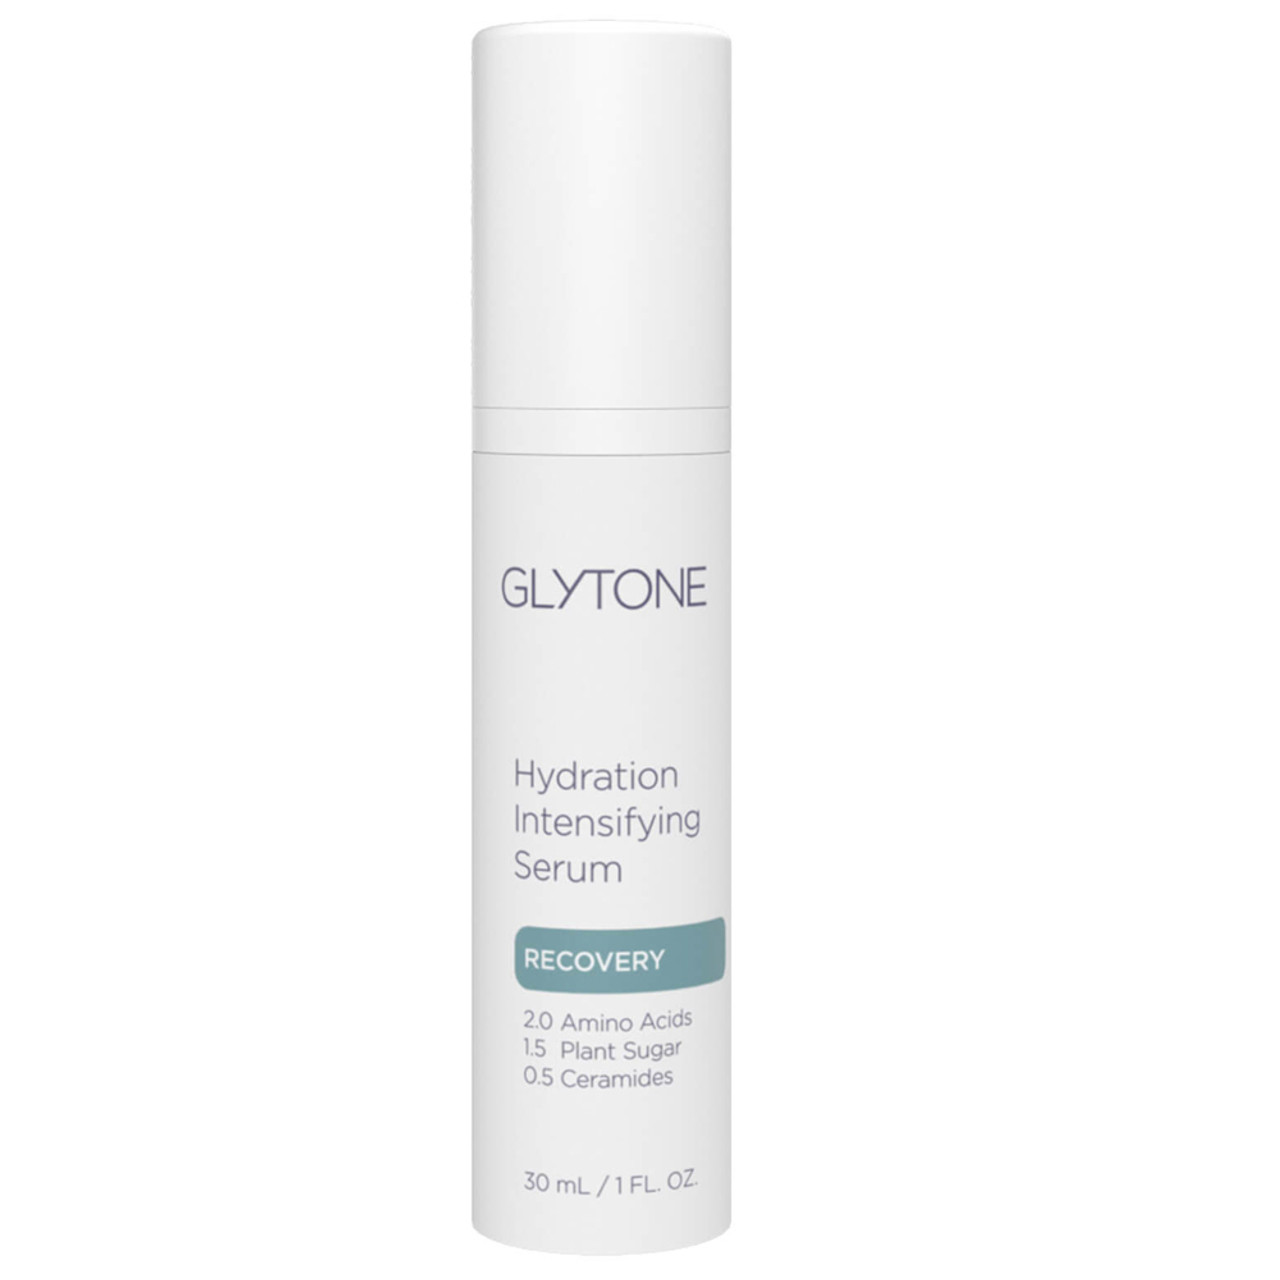 Glytone Hydration Intensifying Serum BeautifiedYou.com